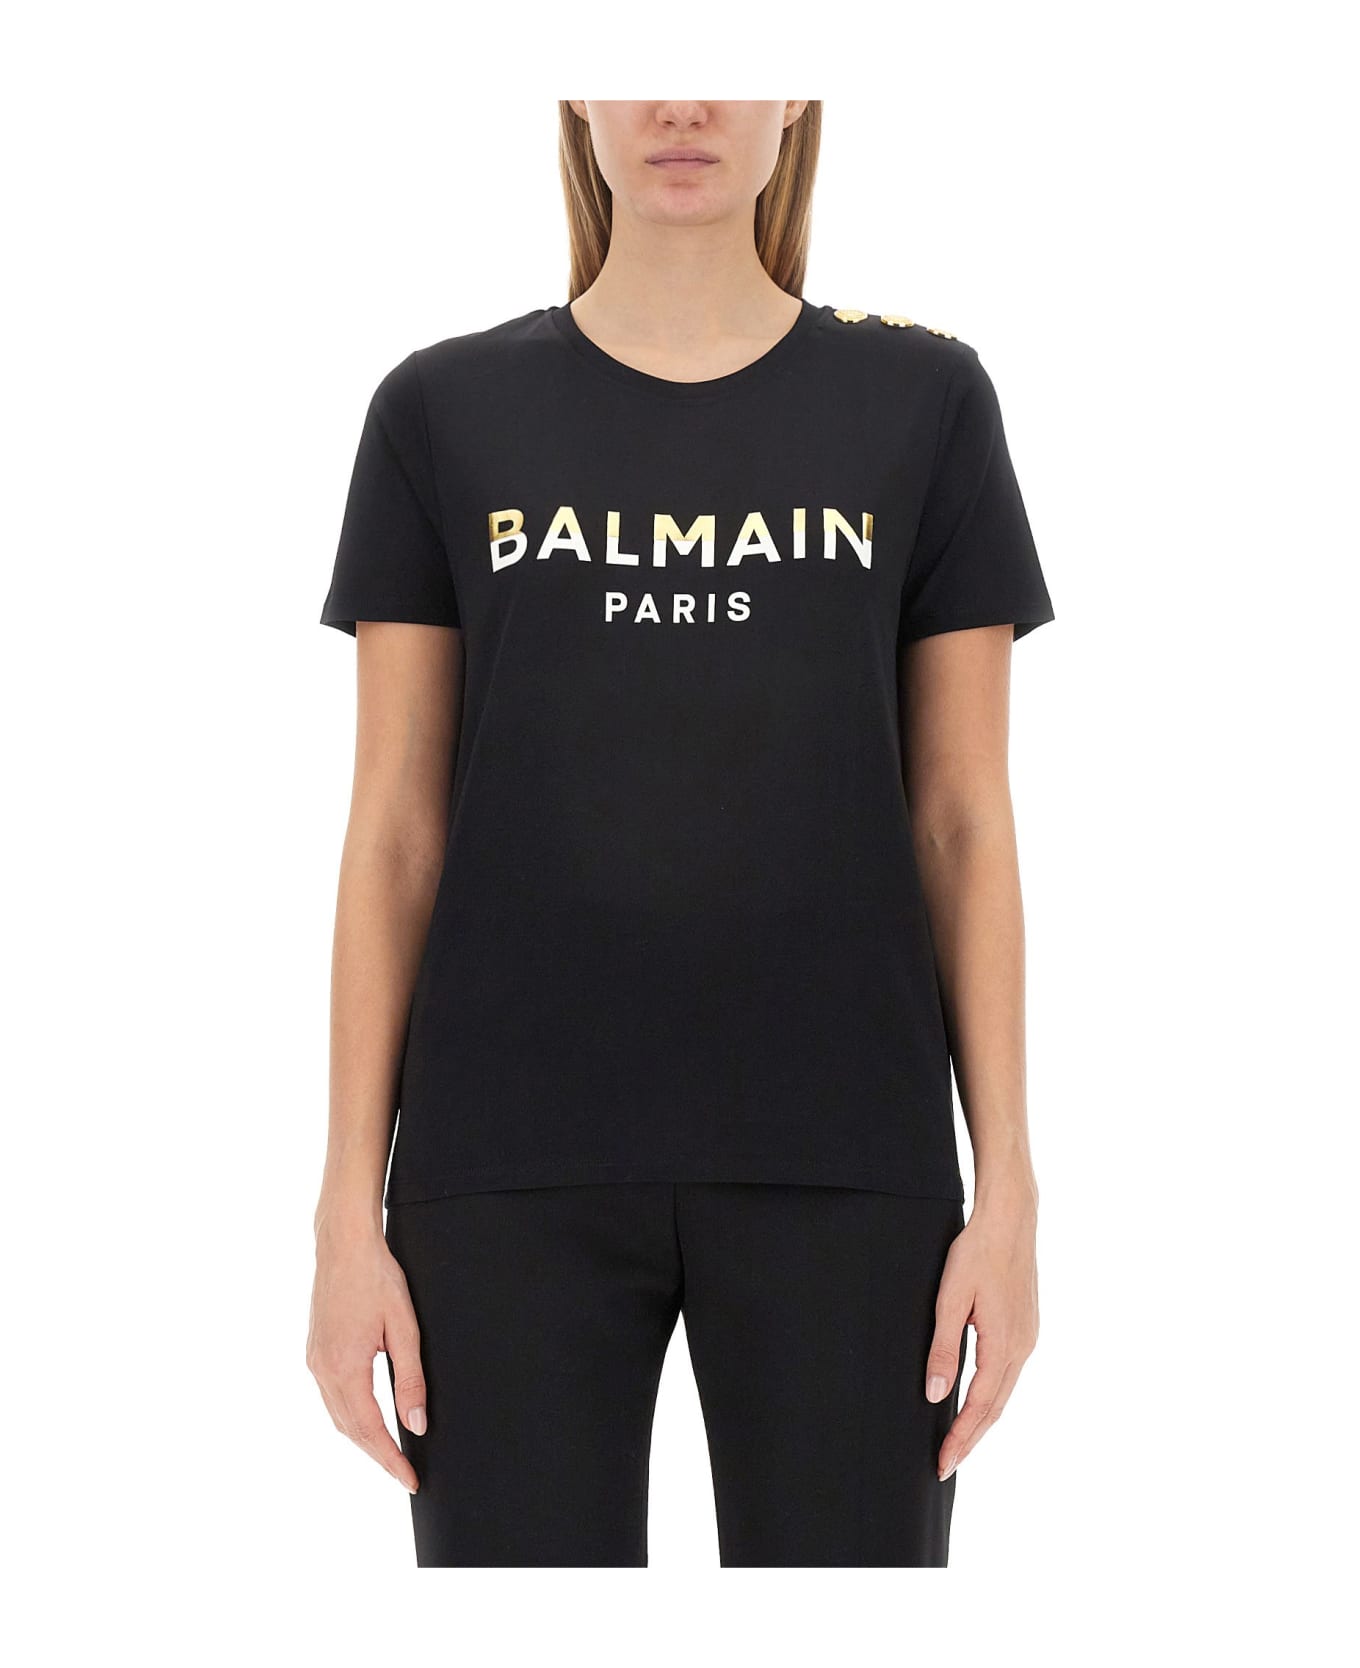 Balmain Logo Printed Crewneck T-shirt - BLACK/GOLD/CREAM